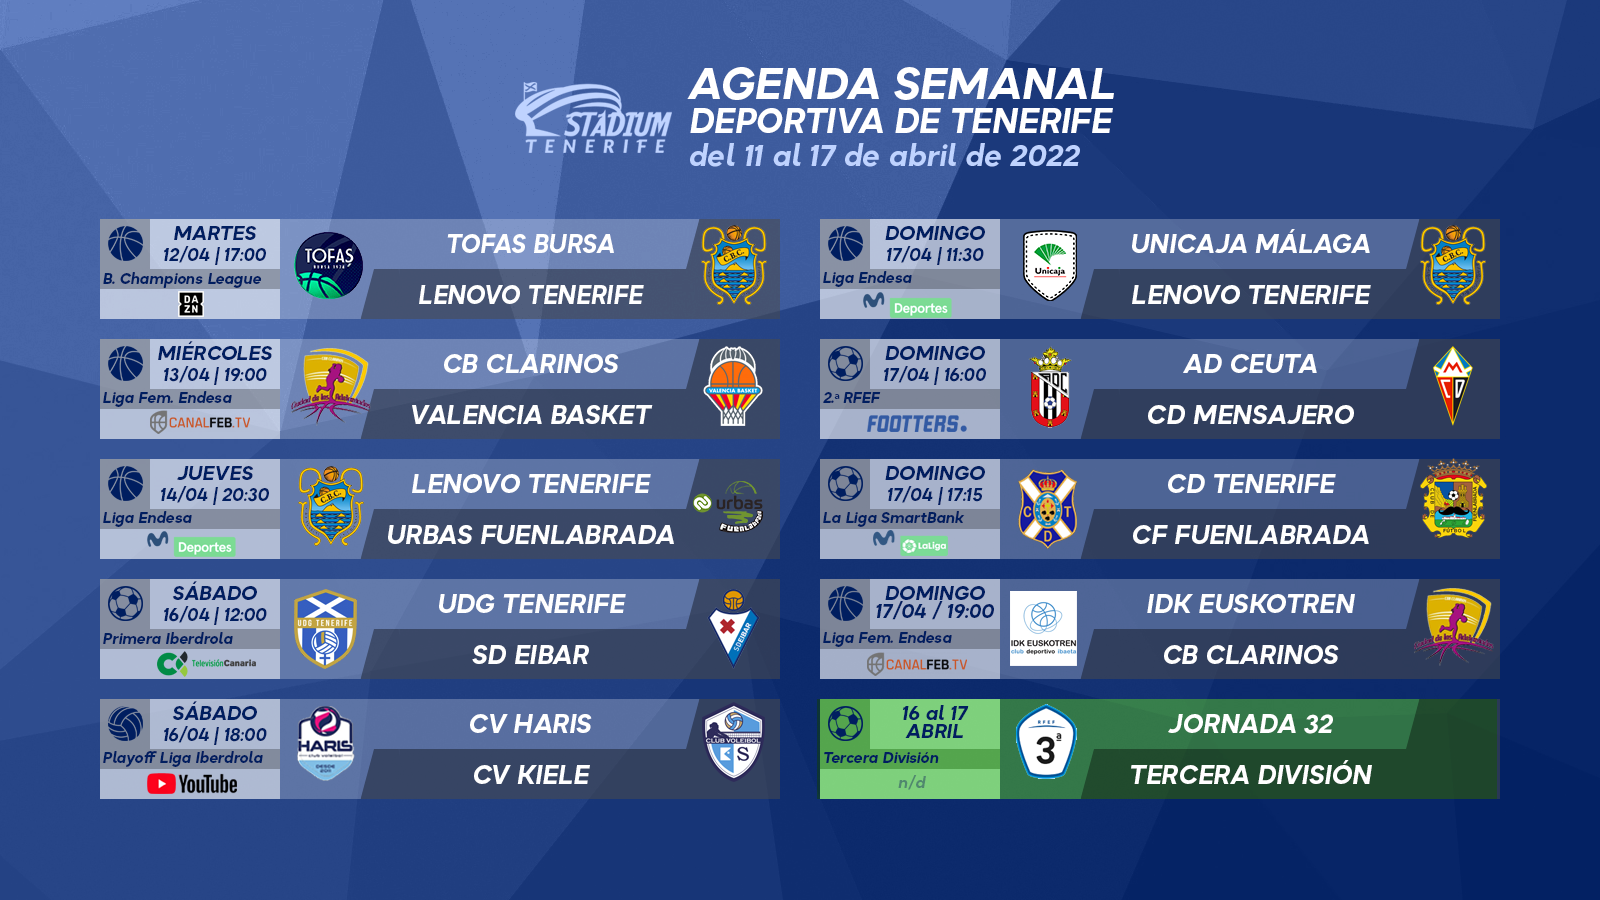 Agenda Semanal Deportiva de Tenerife (11 al 17 de abril)